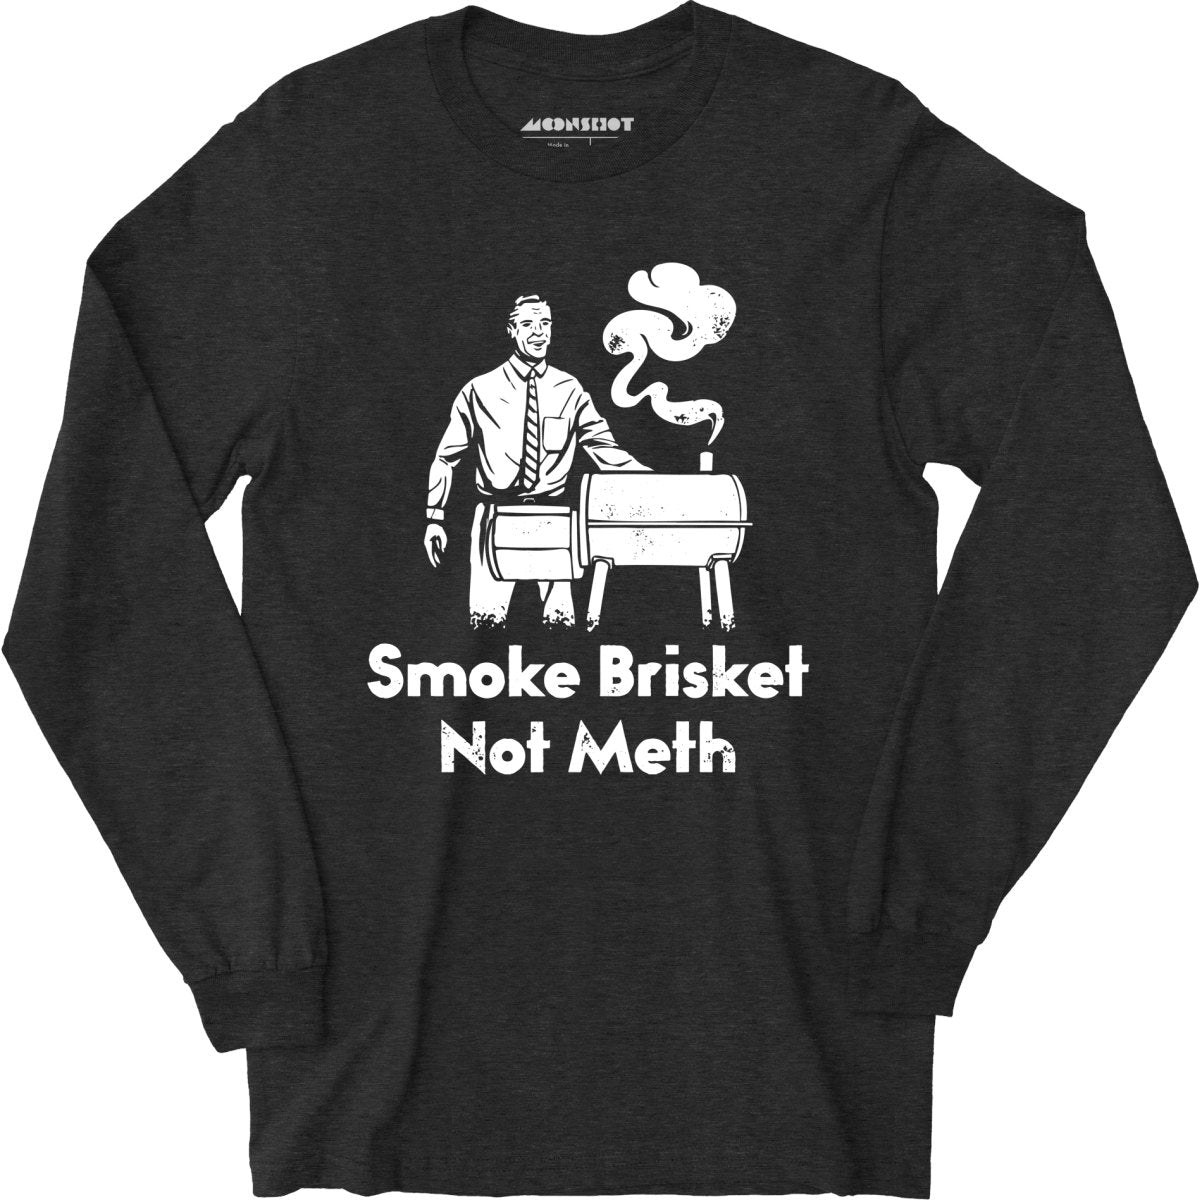 Smoke Brisket Not Meth - Long Sleeve T-Shirt